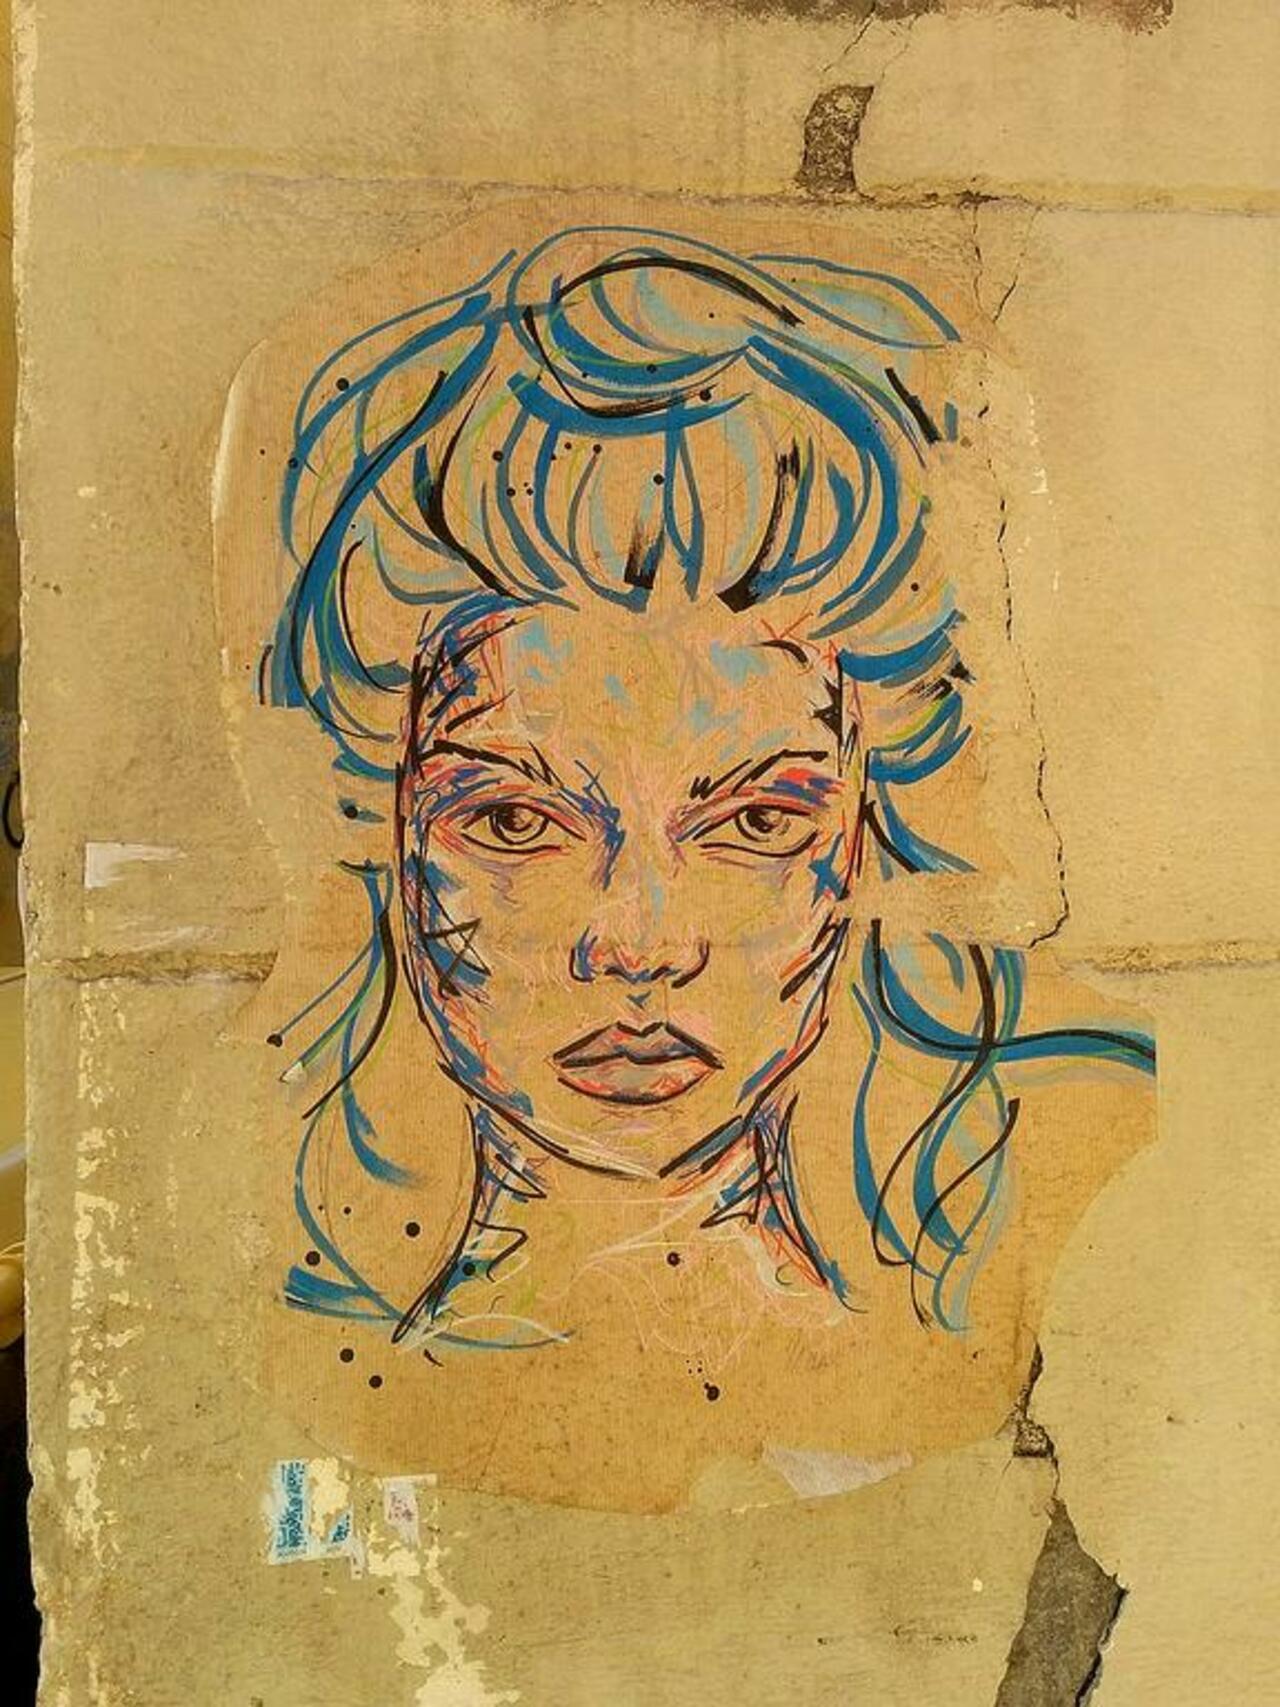 Street Art by anonymous in #Marseille http://www.urbacolors.com #art #mural #graffiti #streetart http://t.co/DX7eoqGOnd